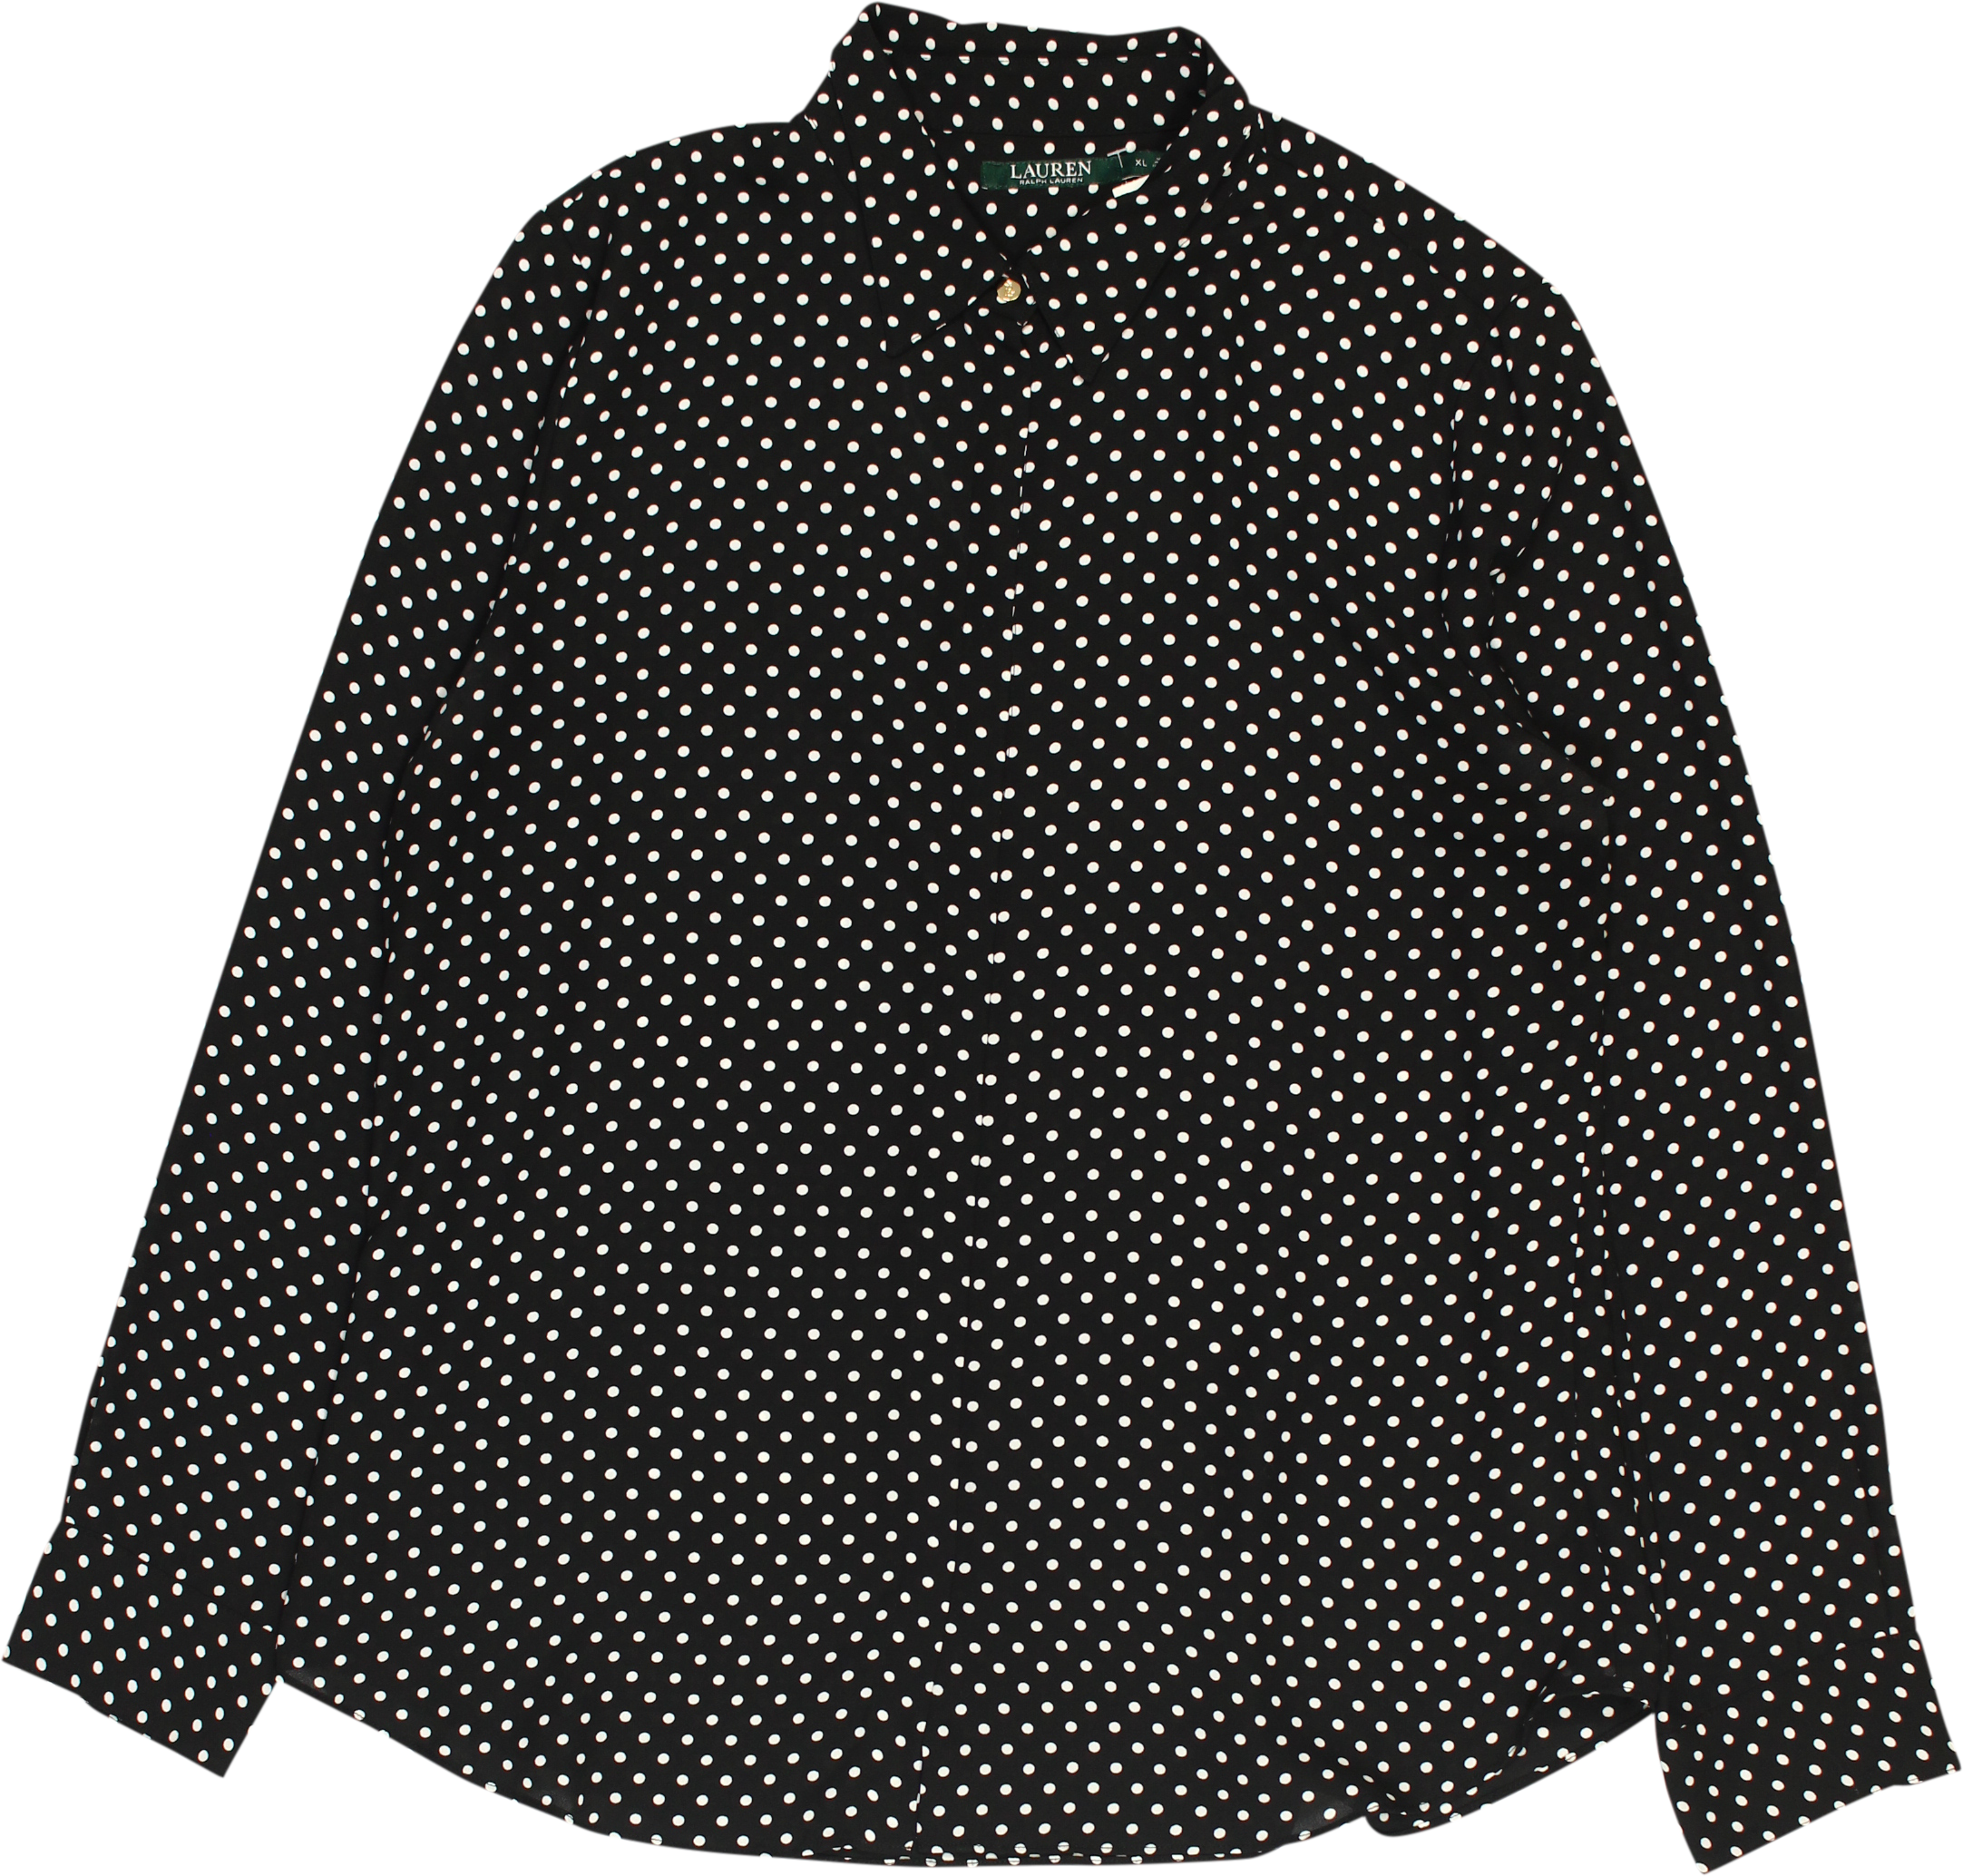 Ralph Lauren - Polkadot Shirt- ThriftTale.com - Vintage and second handclothing